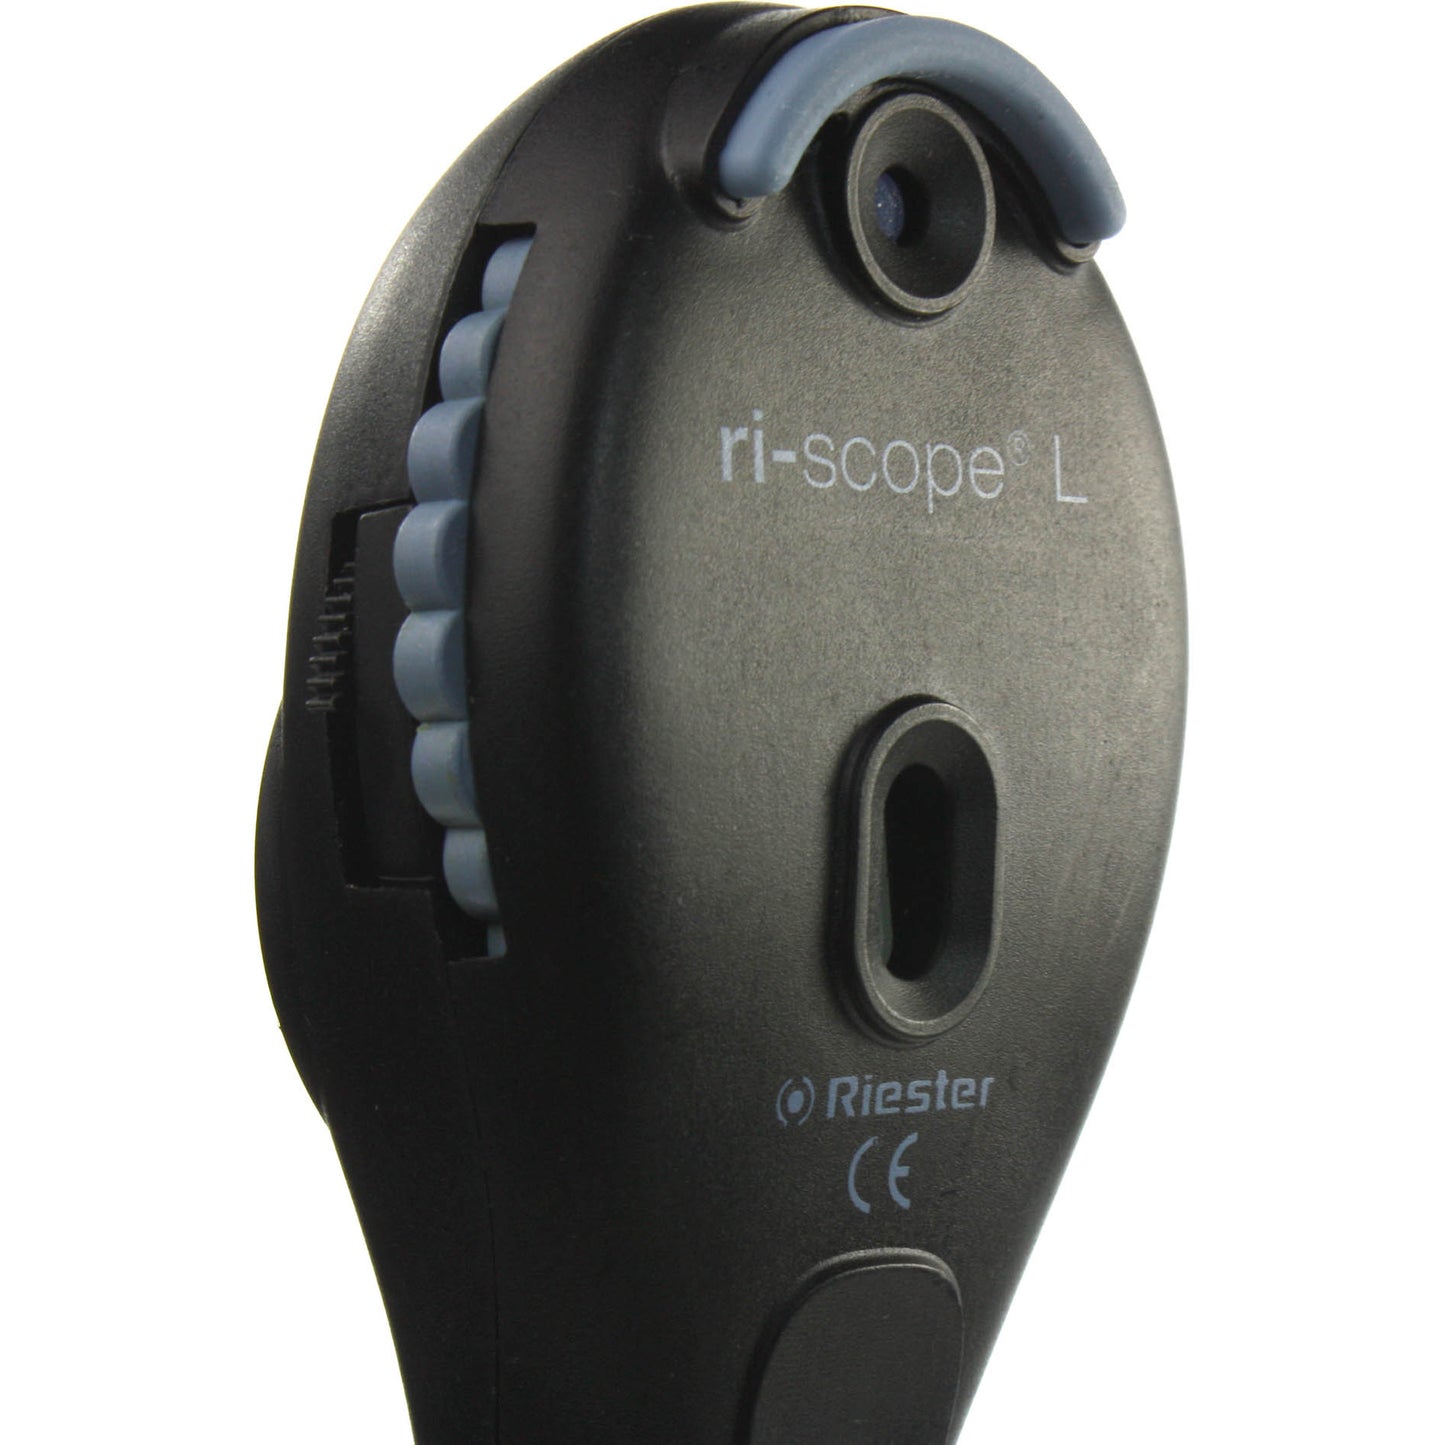 Ri-scope L3 Ophthalmoscope 2.5V